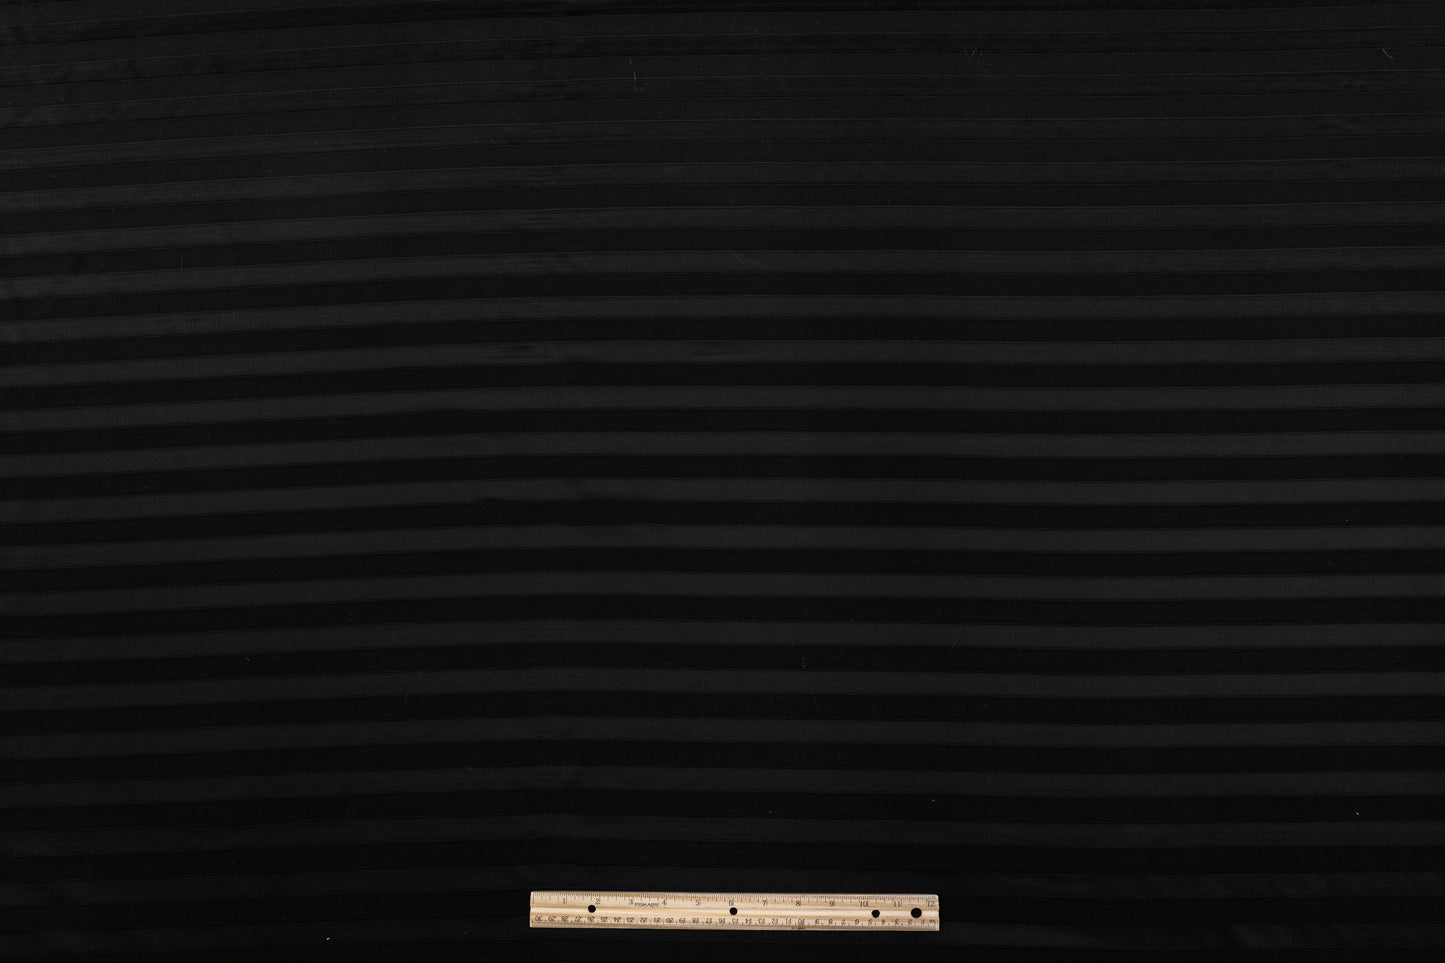 Striped Italian Viscose Wool Jacquard - Black